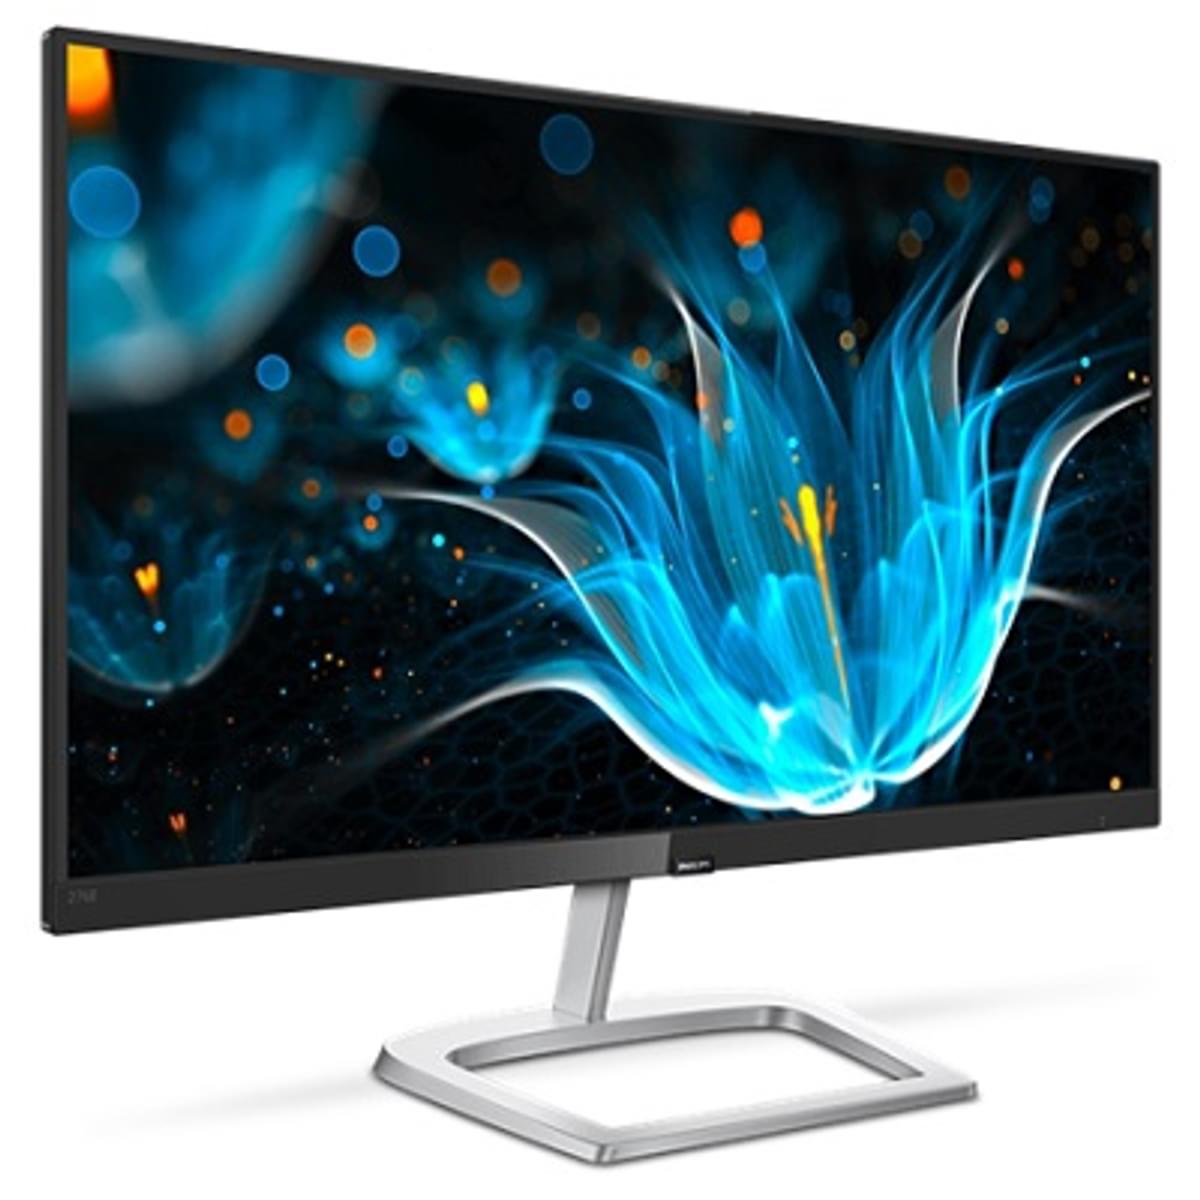 Philips presenteert nieuwe E9 monitoren image